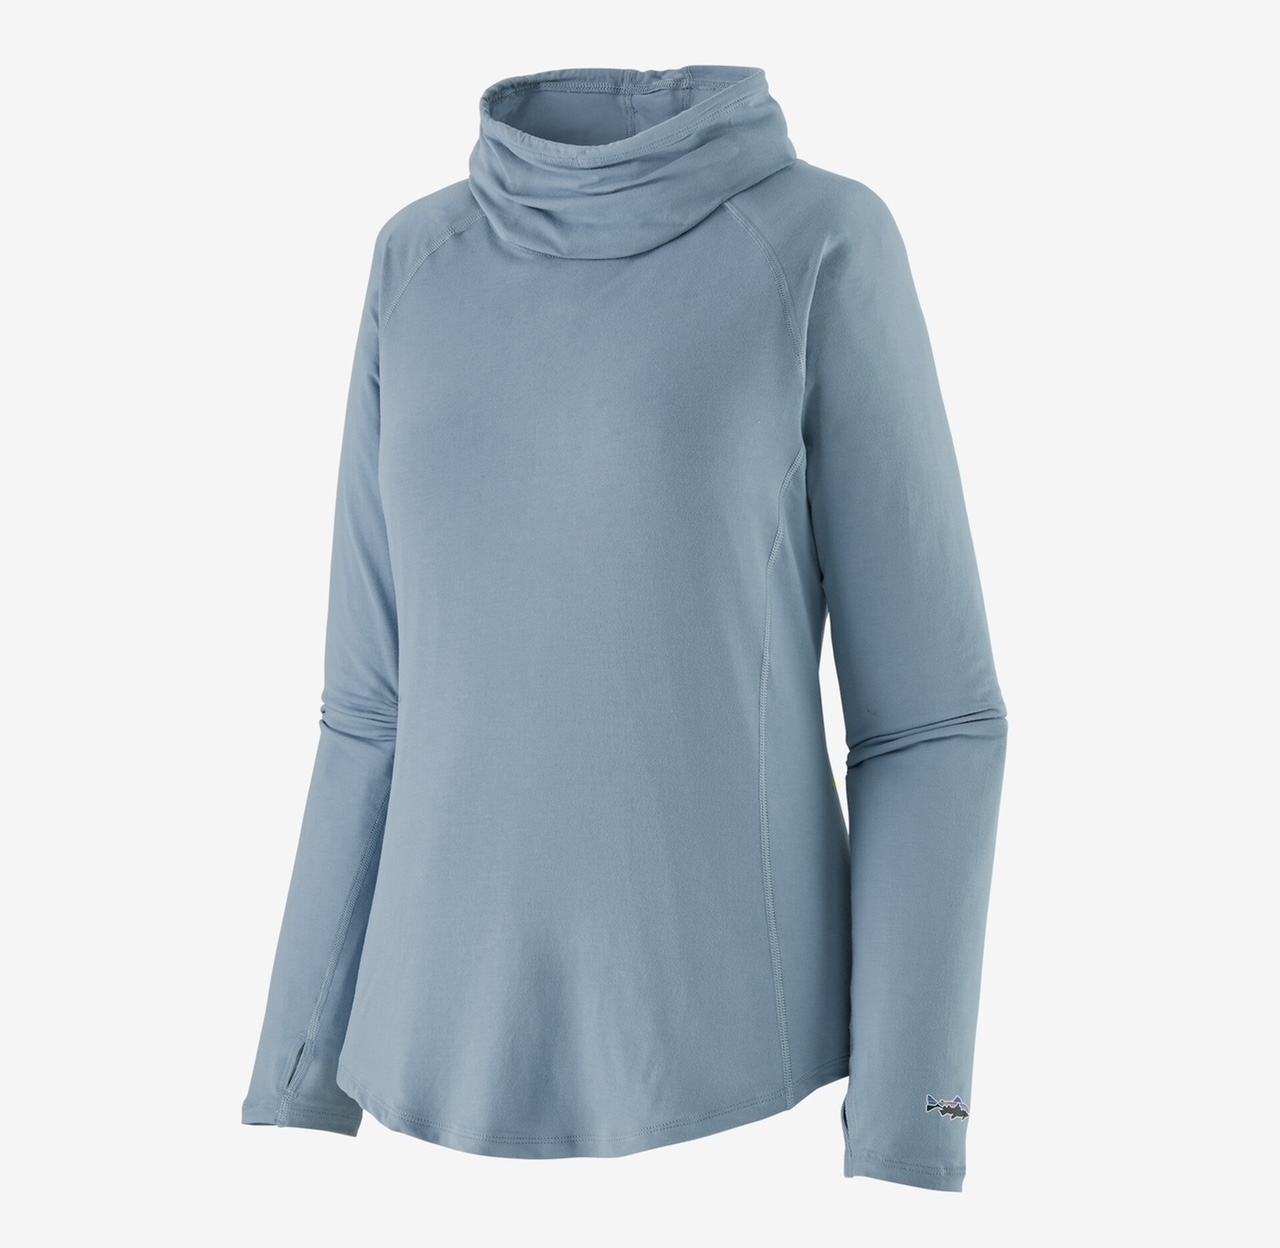 Patagonia W's Tropic Comfort Natural Shirt - Light Plume Grey - Small